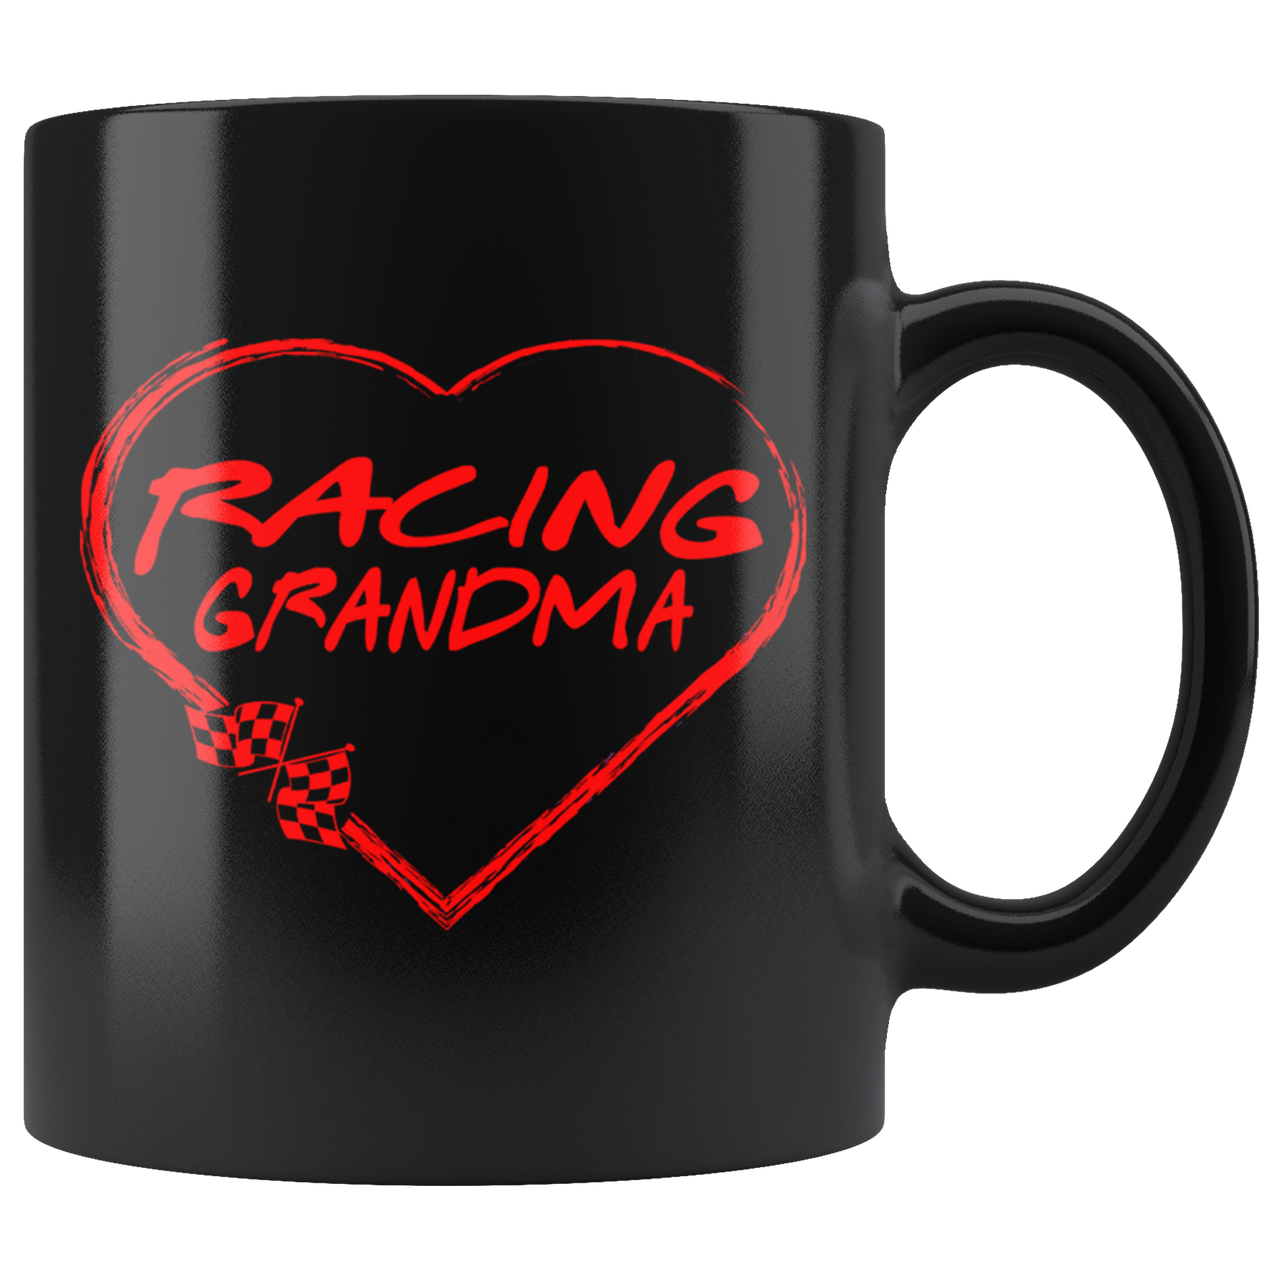 Racing Grandma Heart Mug!